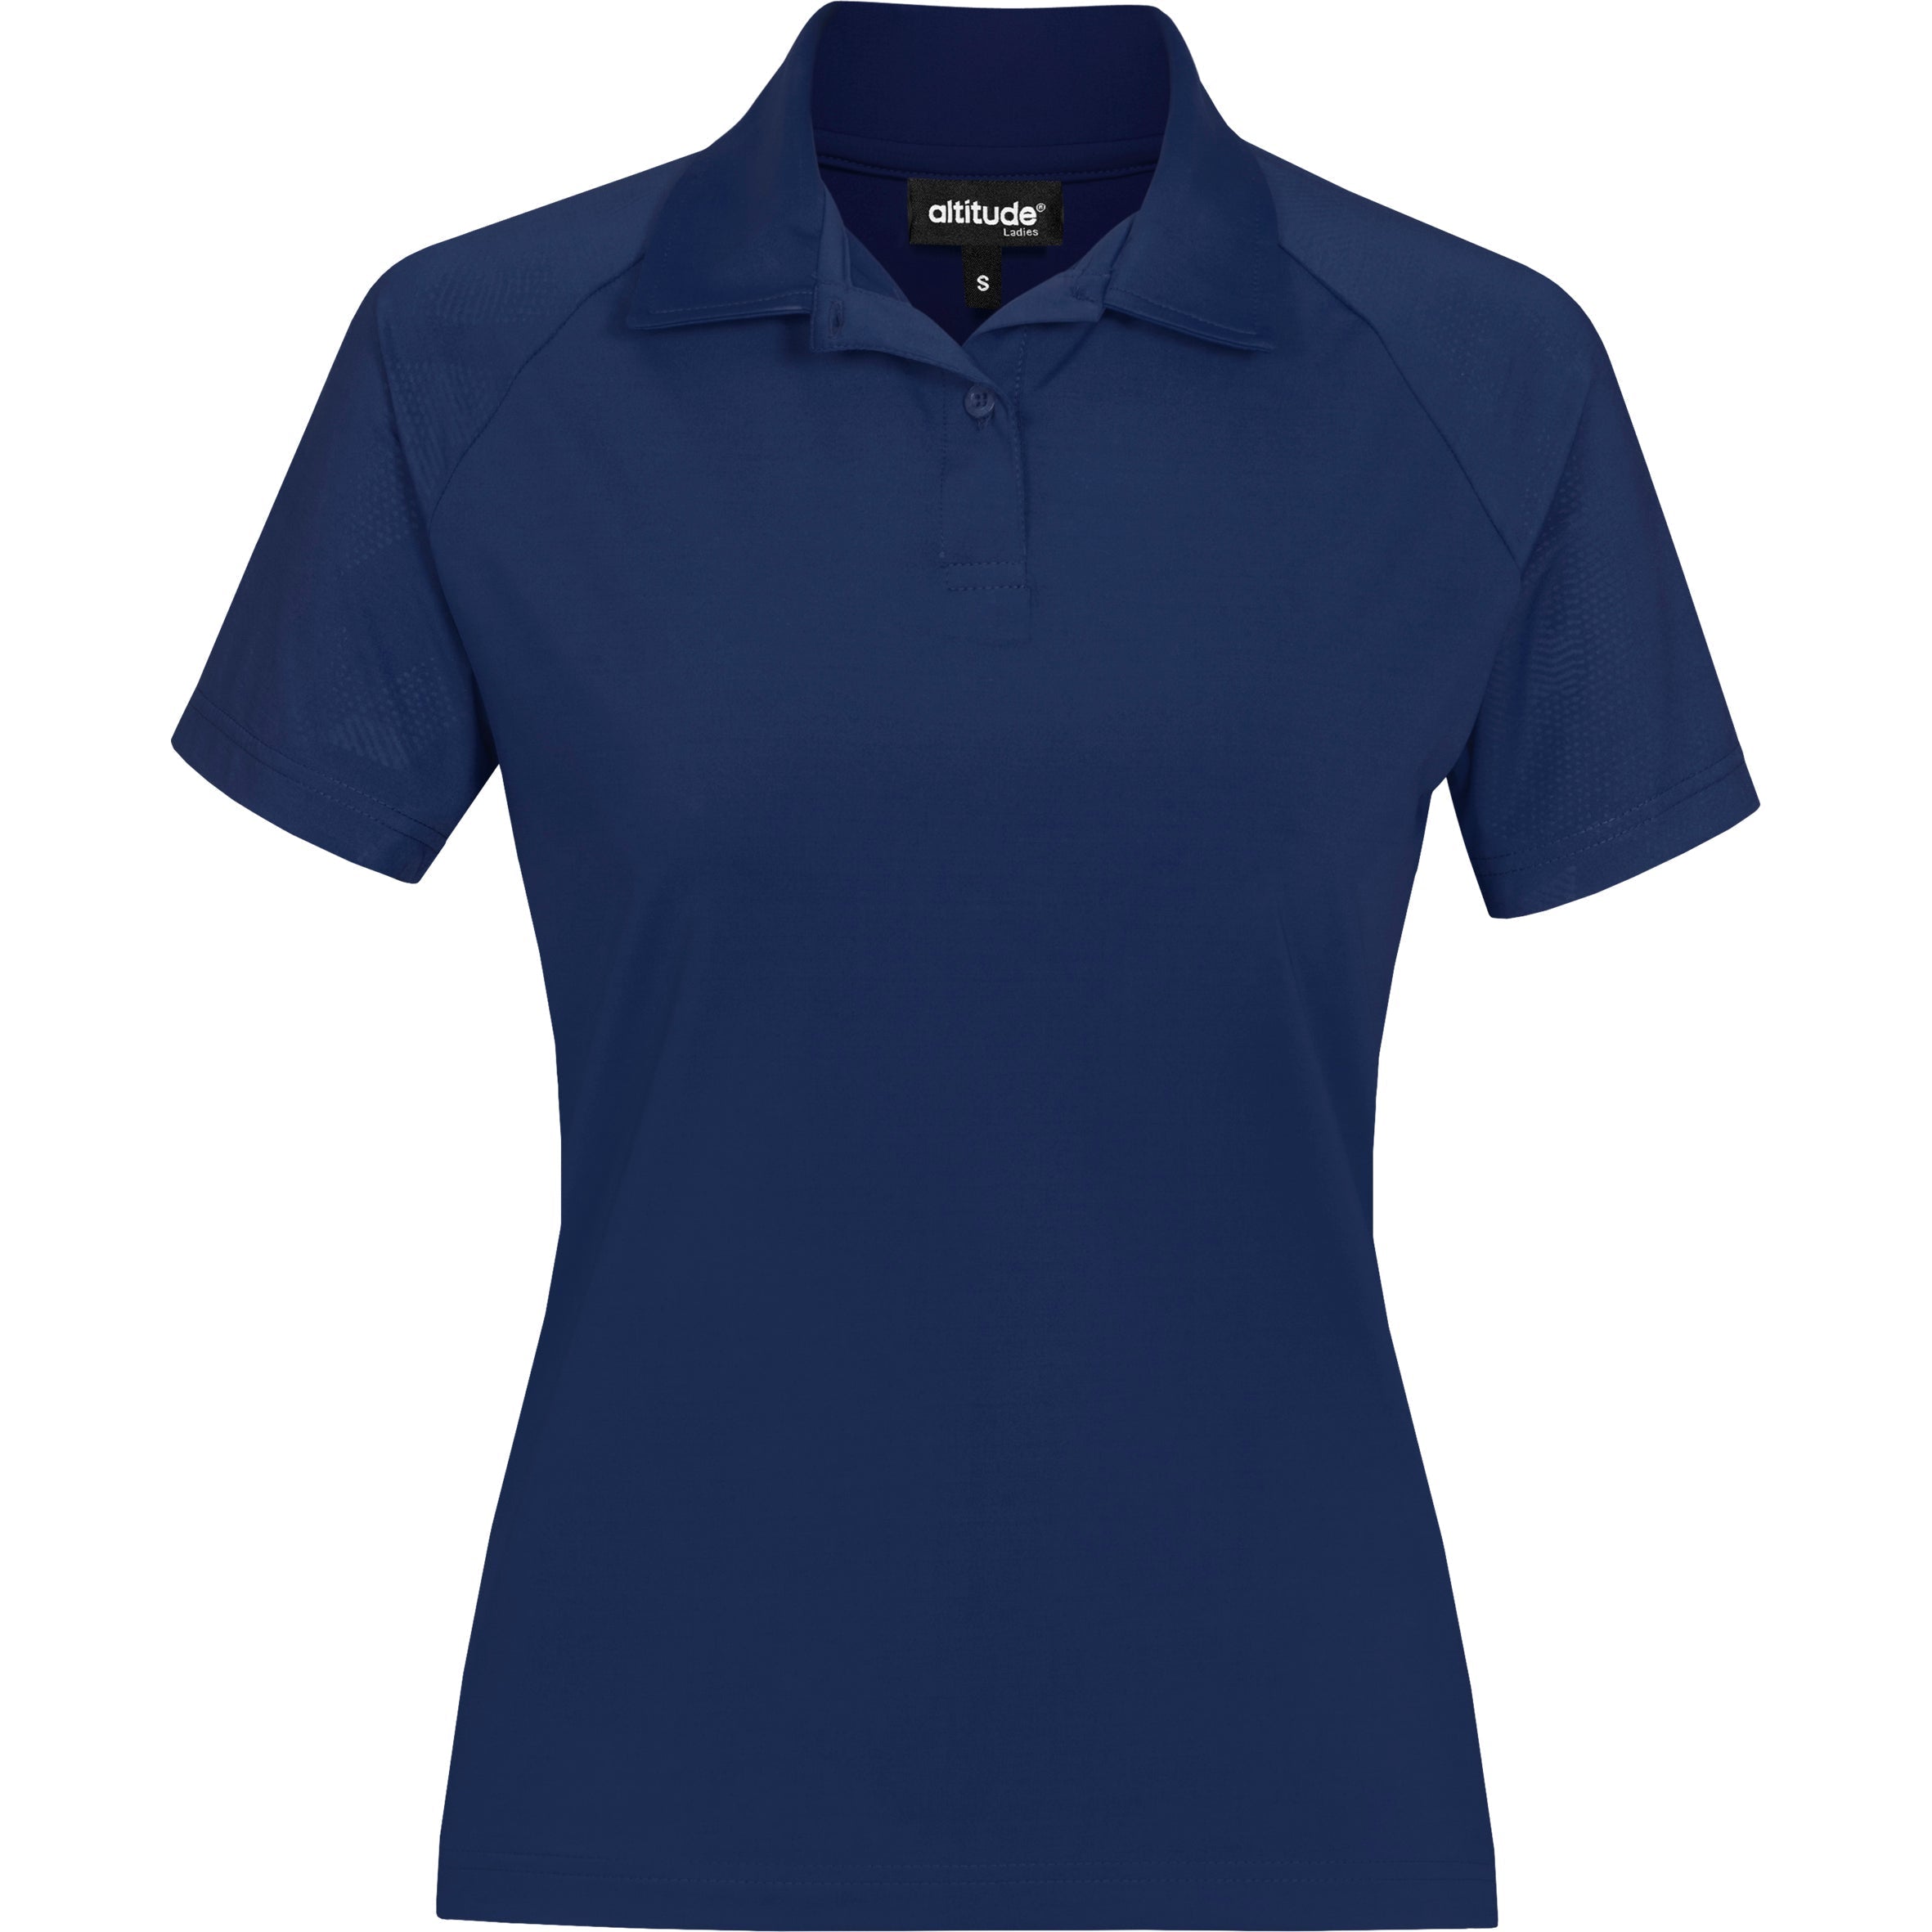 Ladies Santorini Golf Shirt-2XL-Navy-N